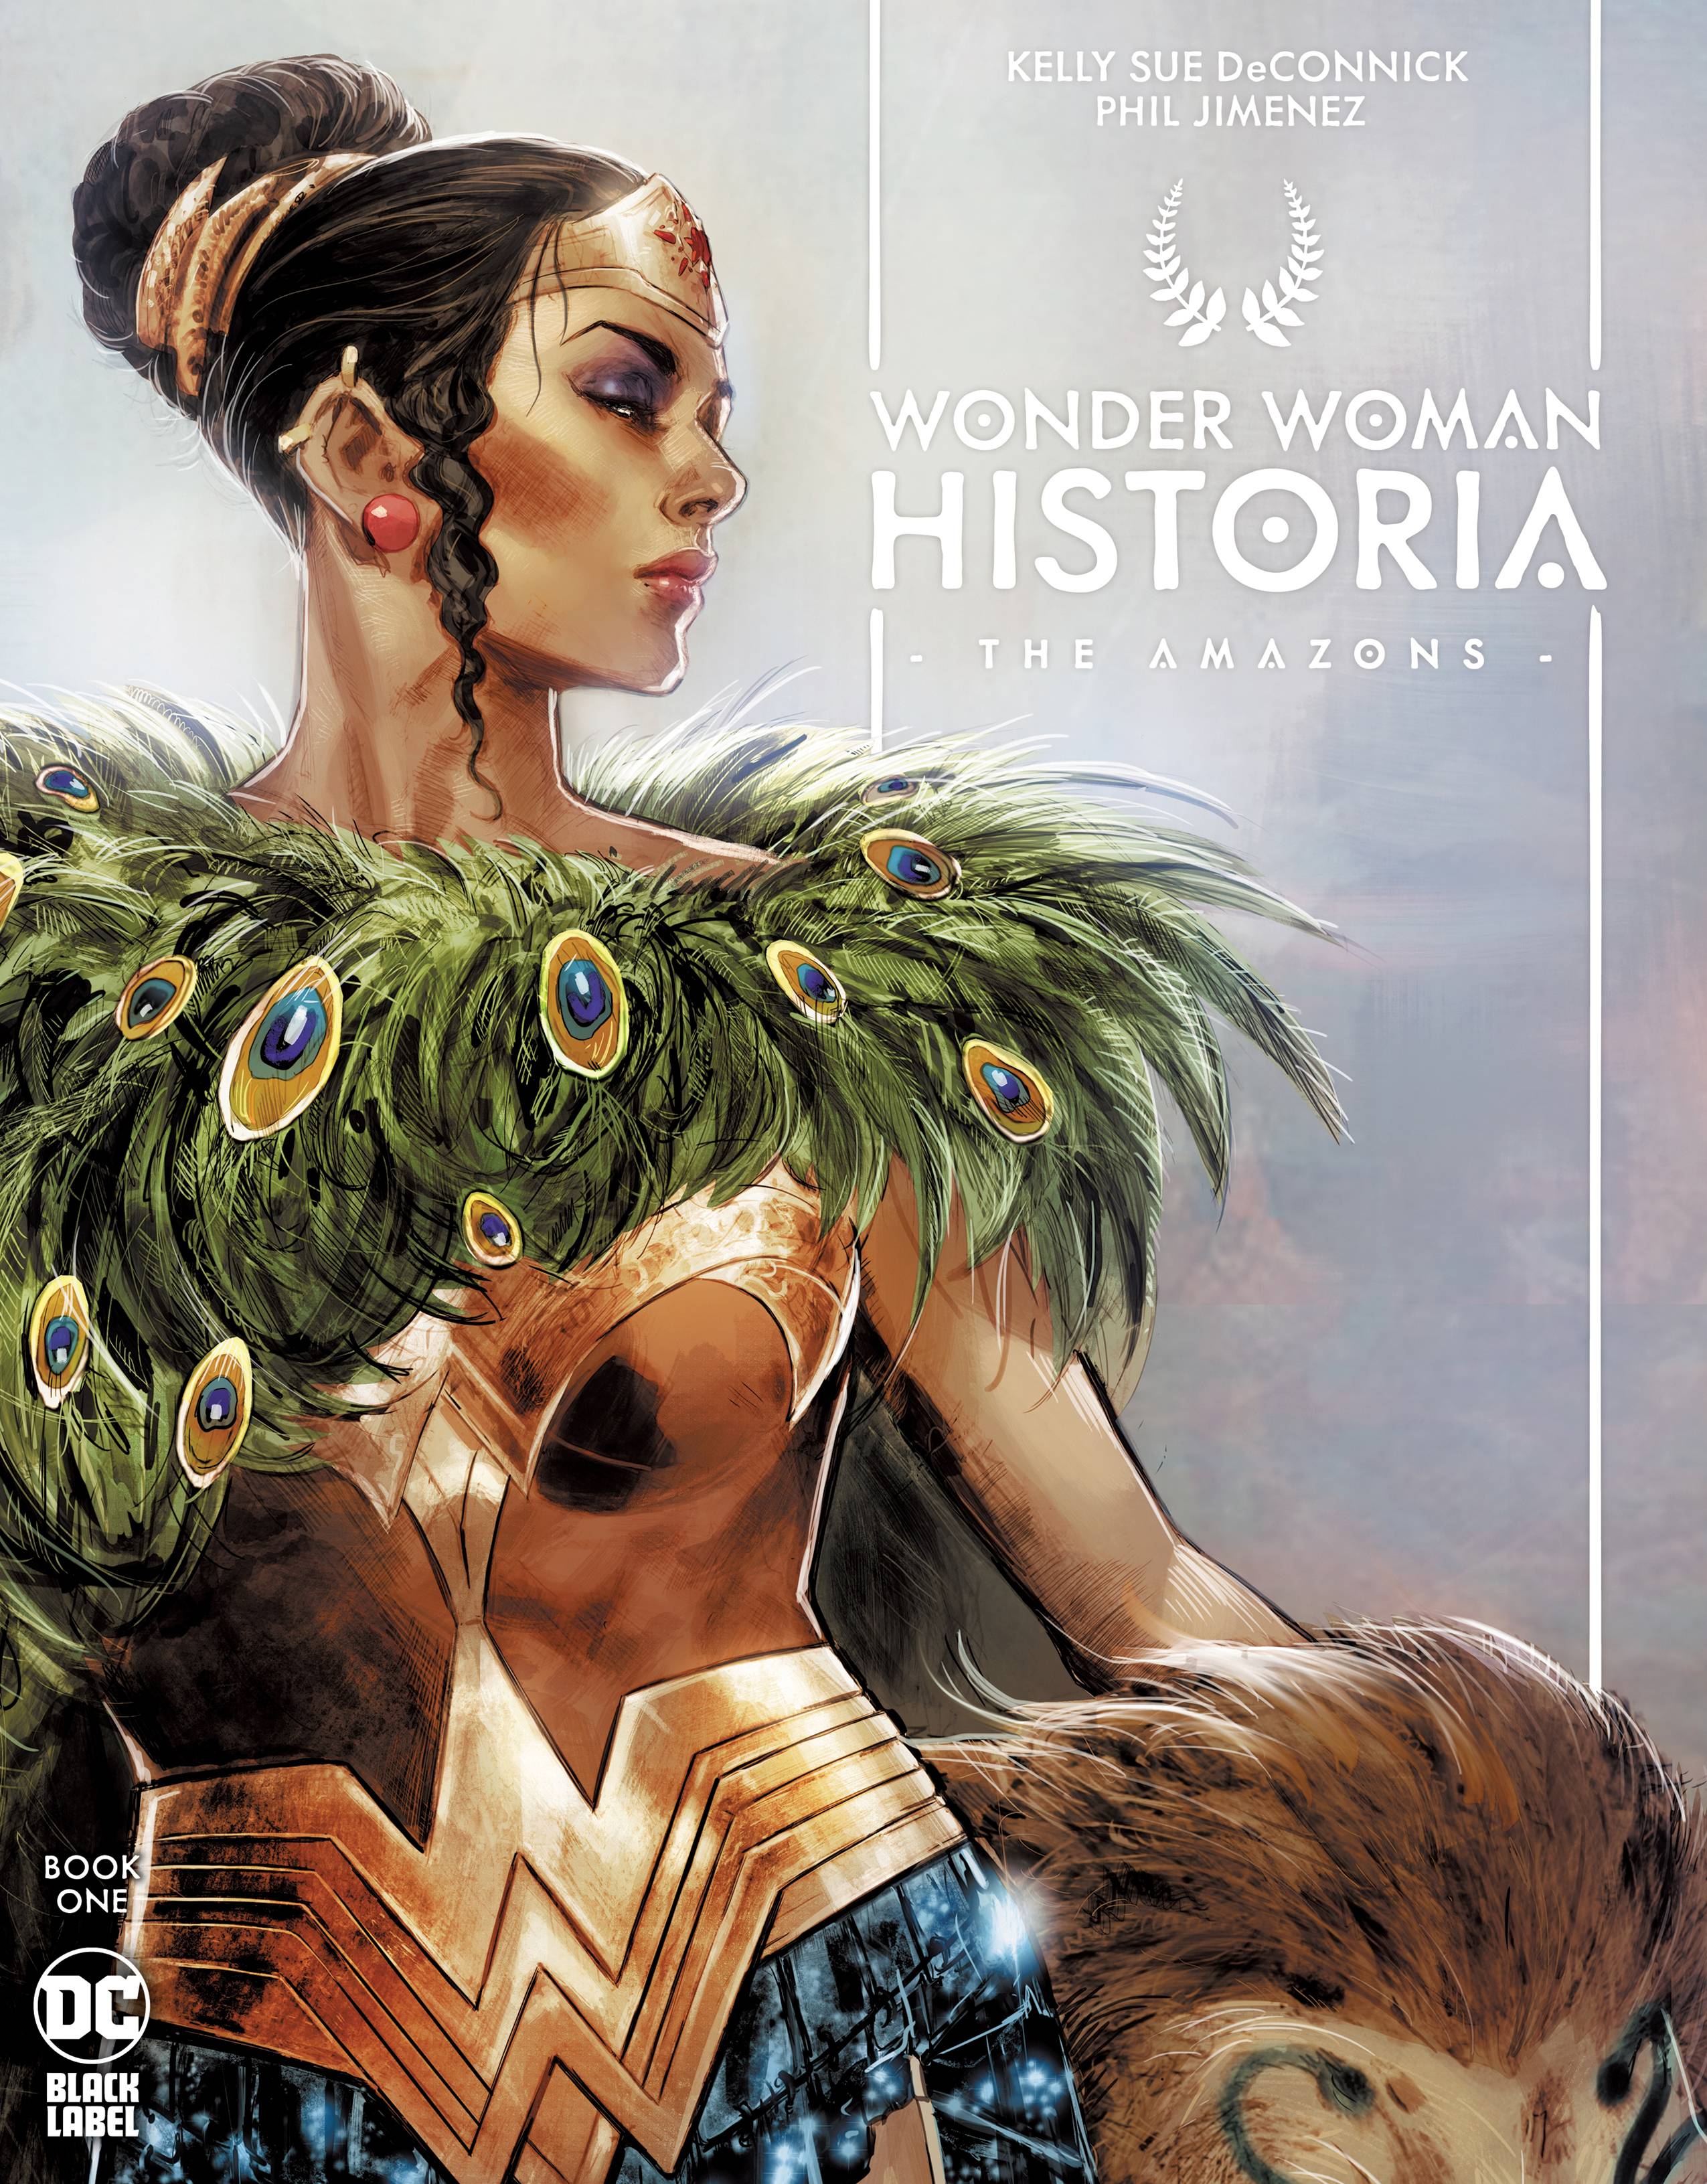 WONDER WOMAN HISTORIA THE AMAZONS #1 (OF 3) CVR A JIMENEZ (M